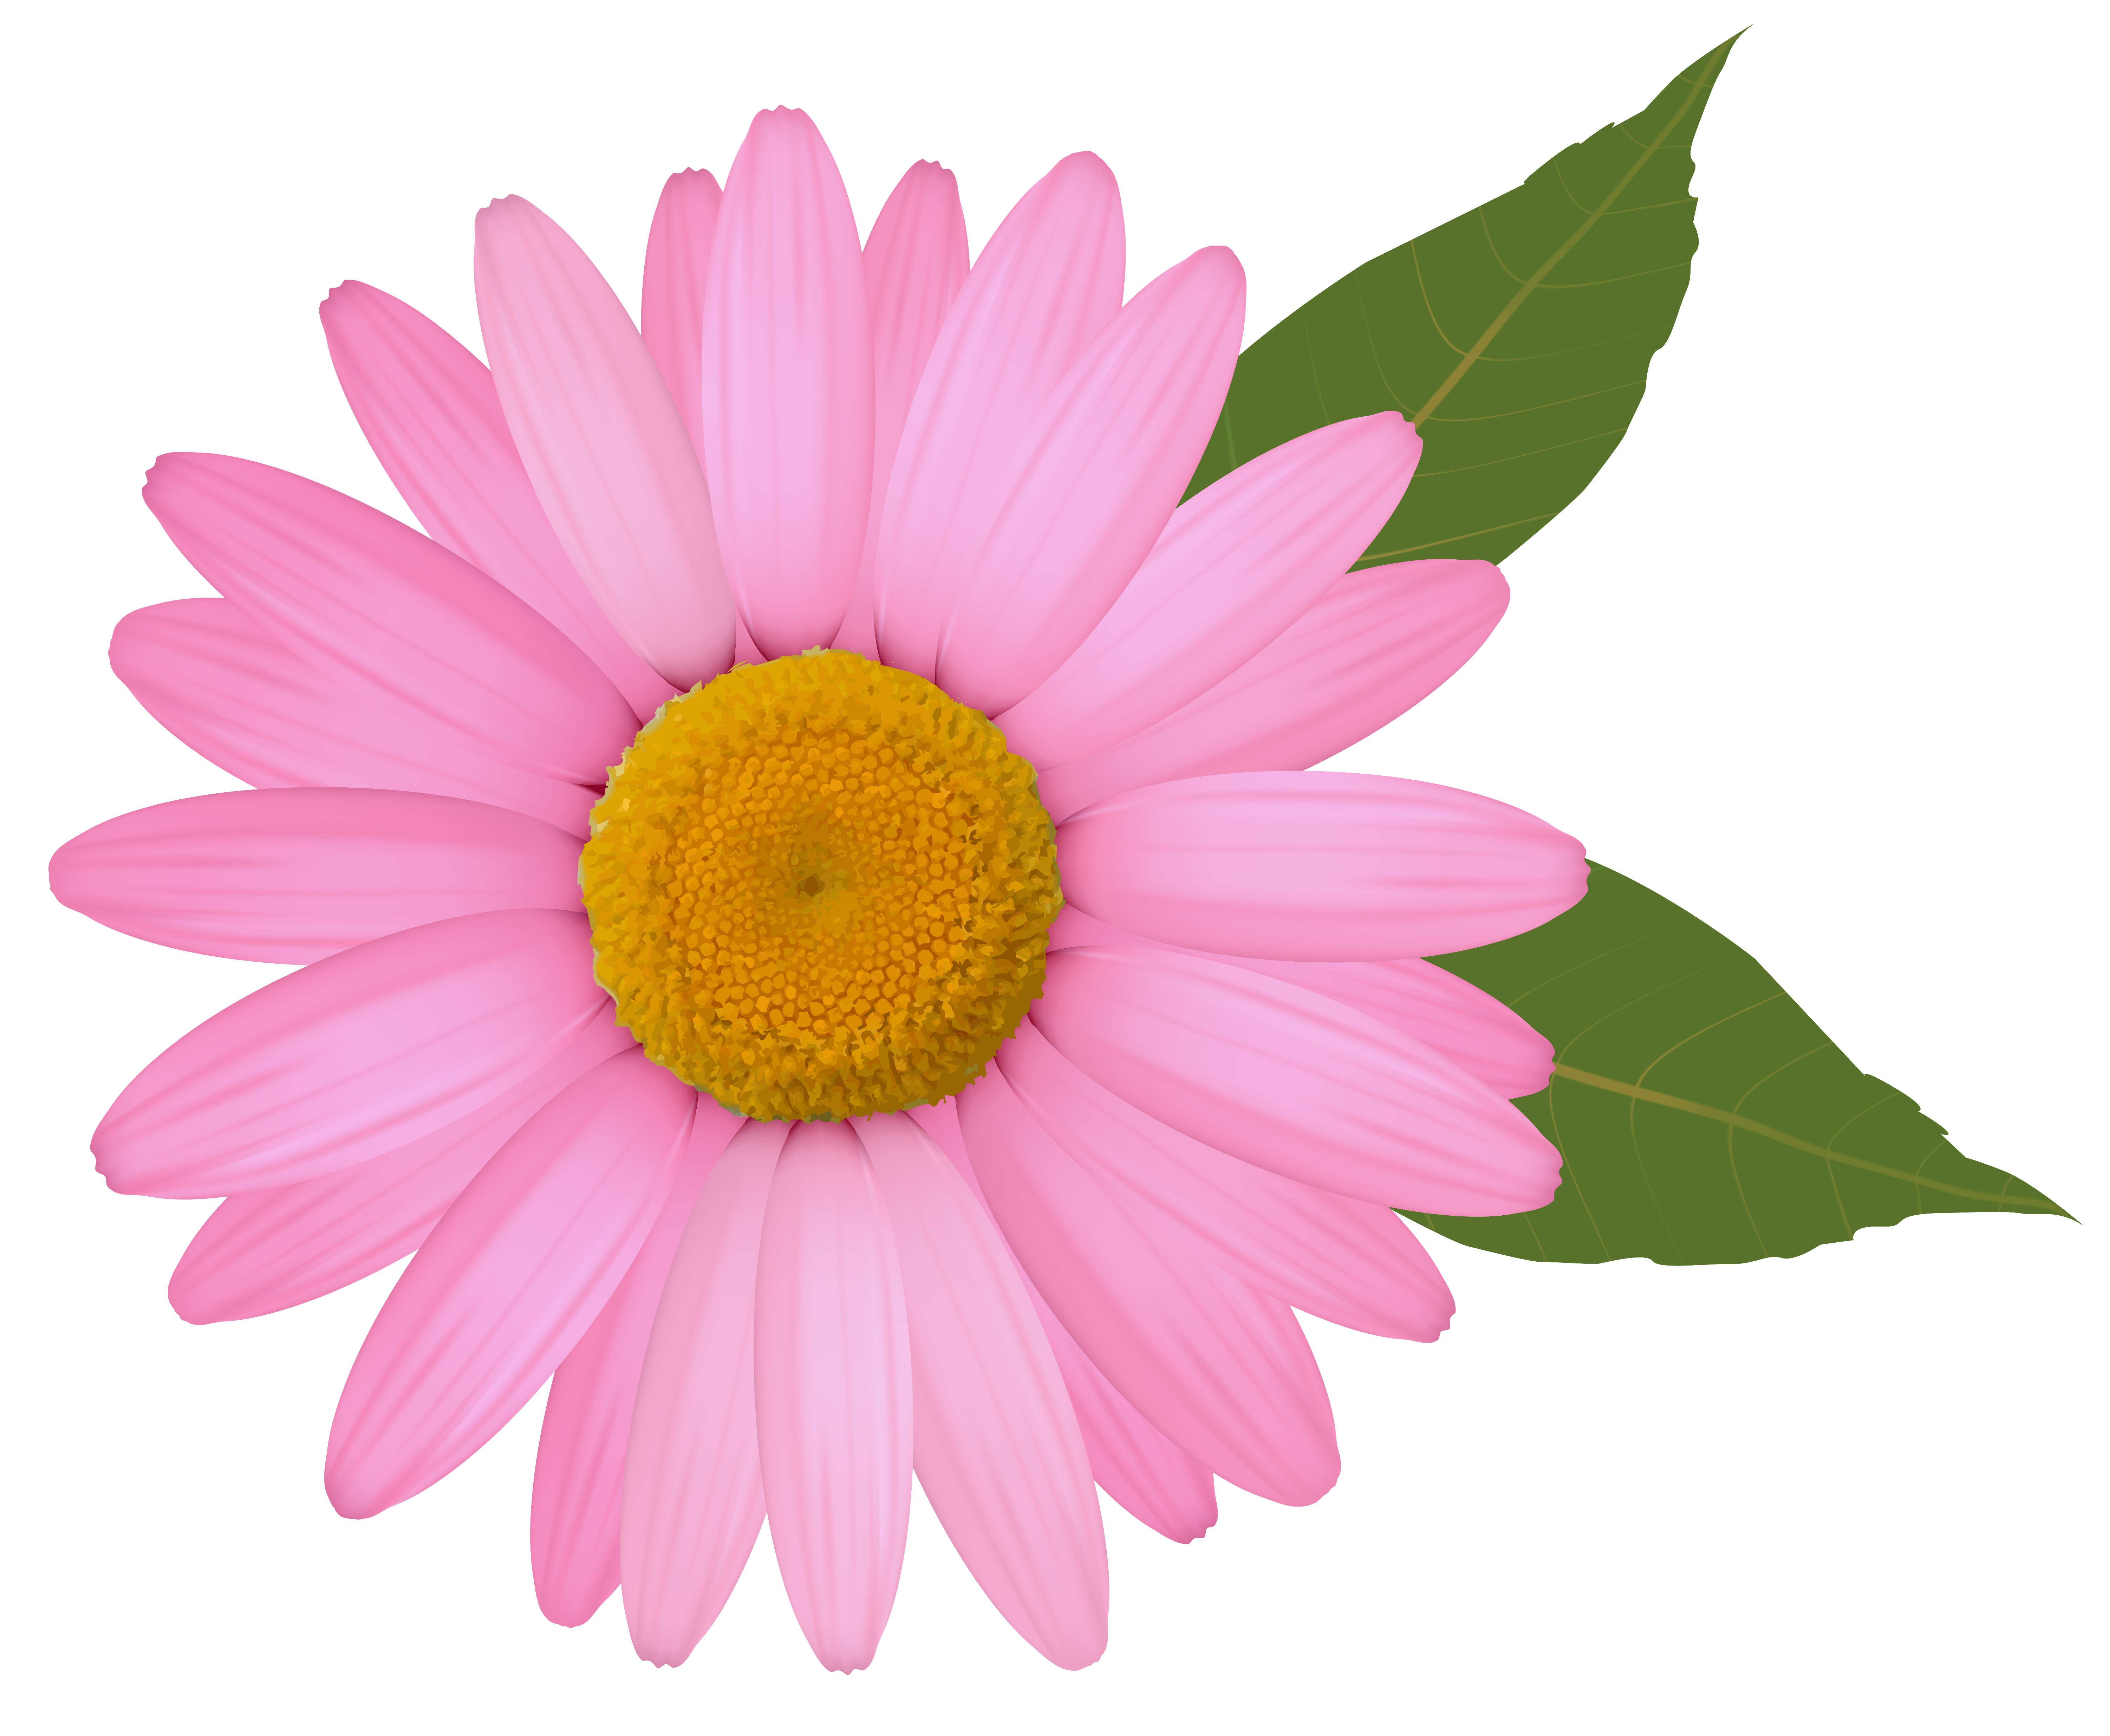 Pink daisy photo